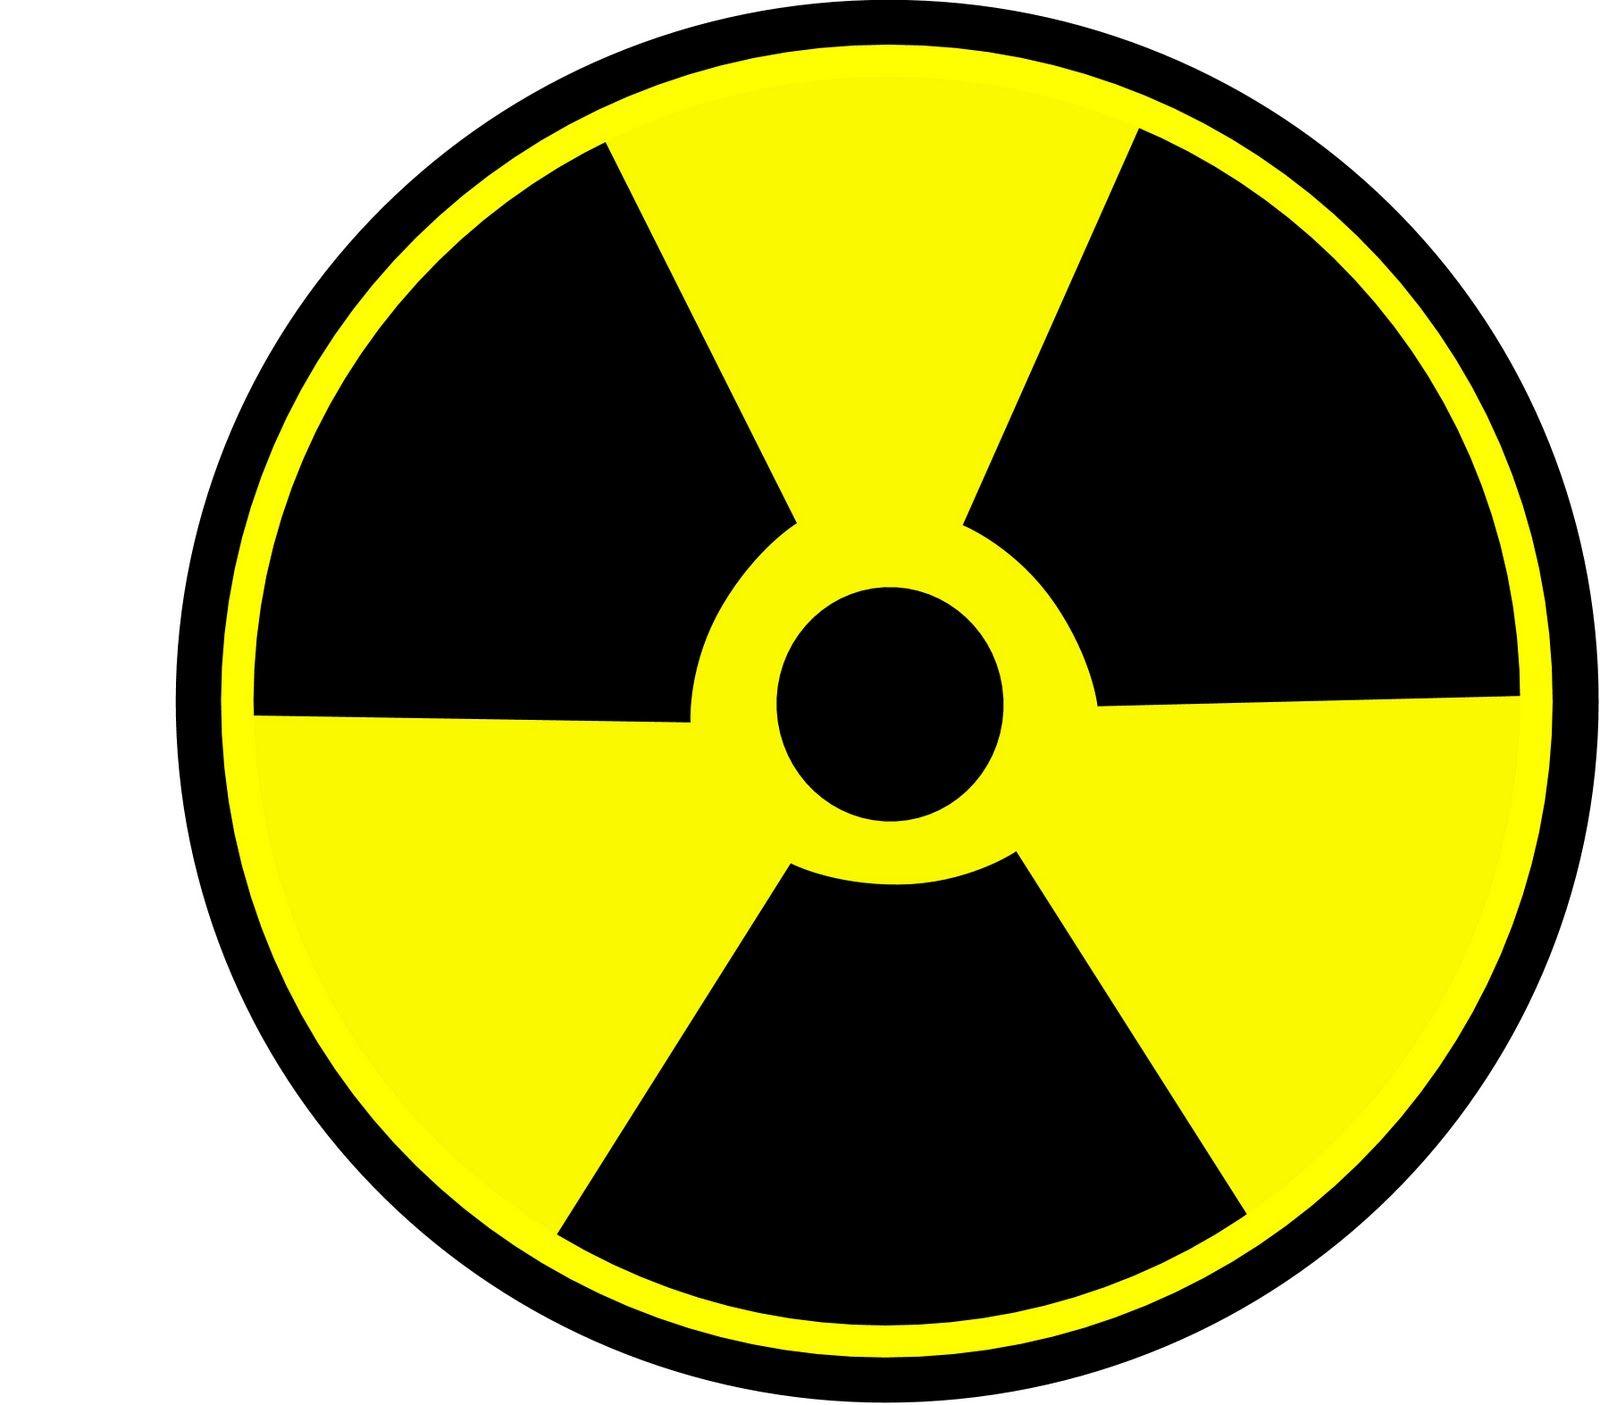 Image For > Green Hazard Symbols